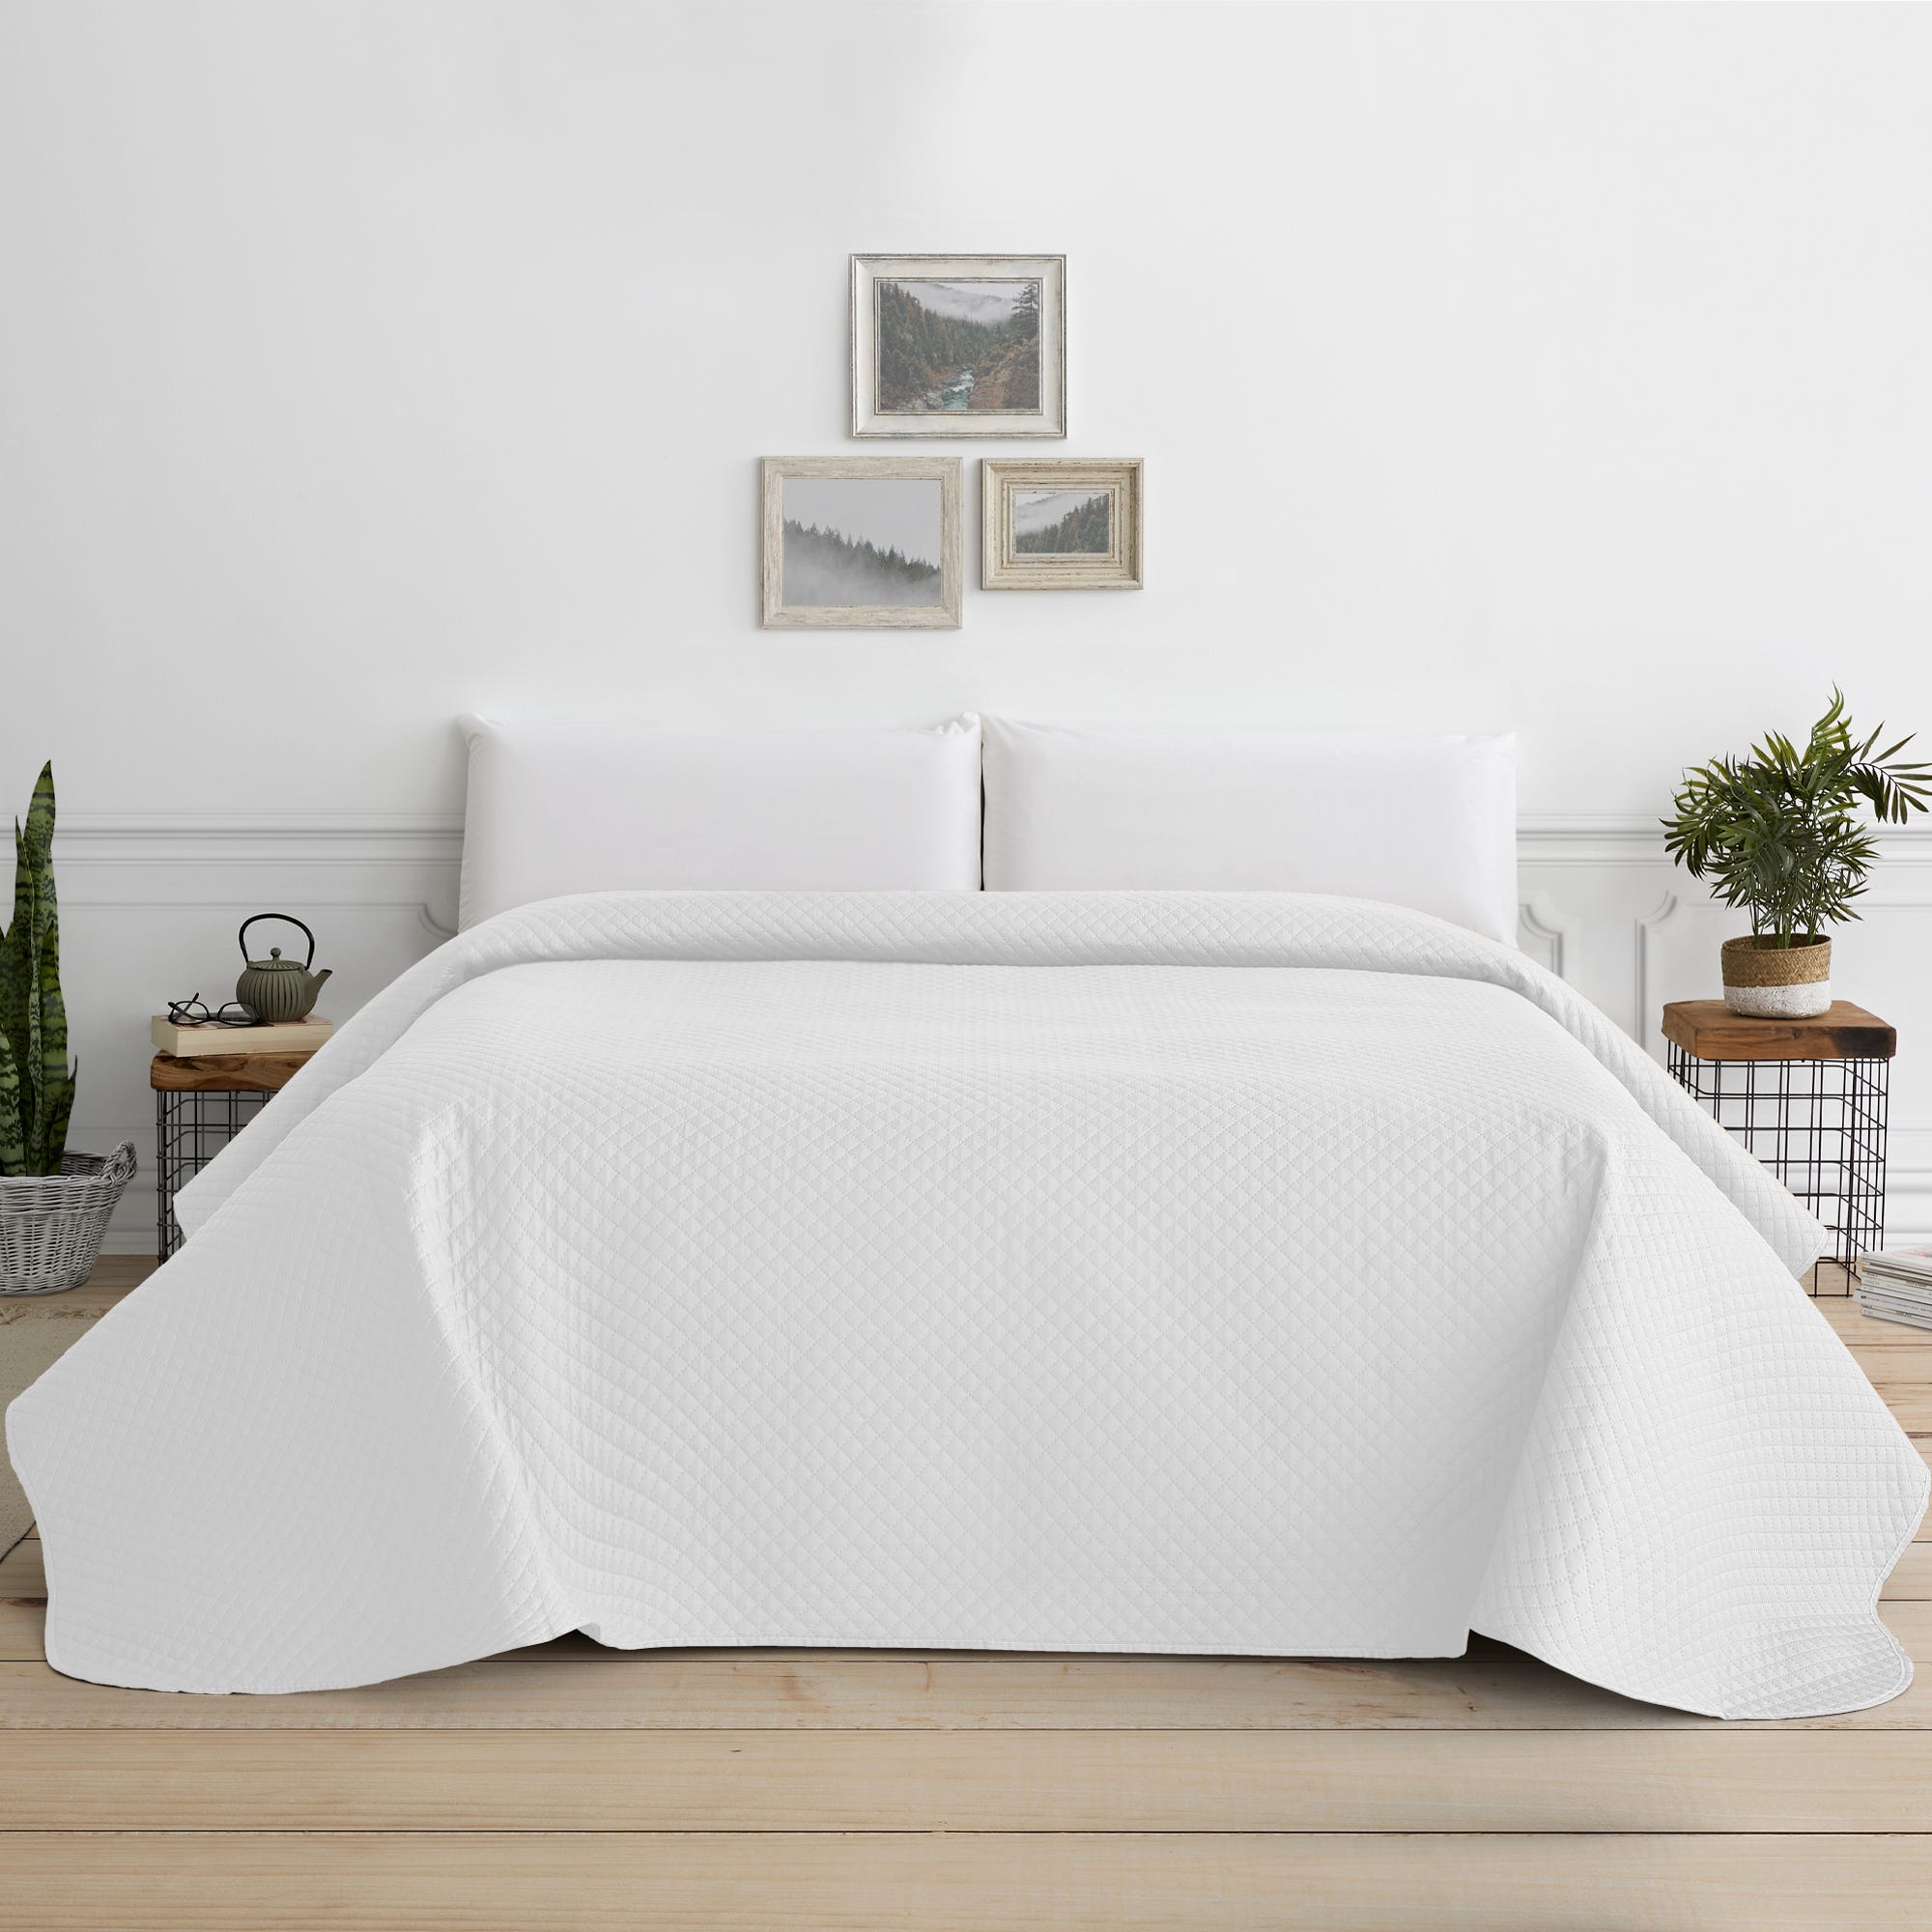 Colcha Bouti para Cama Verano. Colcha cubre cama acolchada reversible  Rombos. Cama 180 - 270 x 260 cm. Color Blanco.